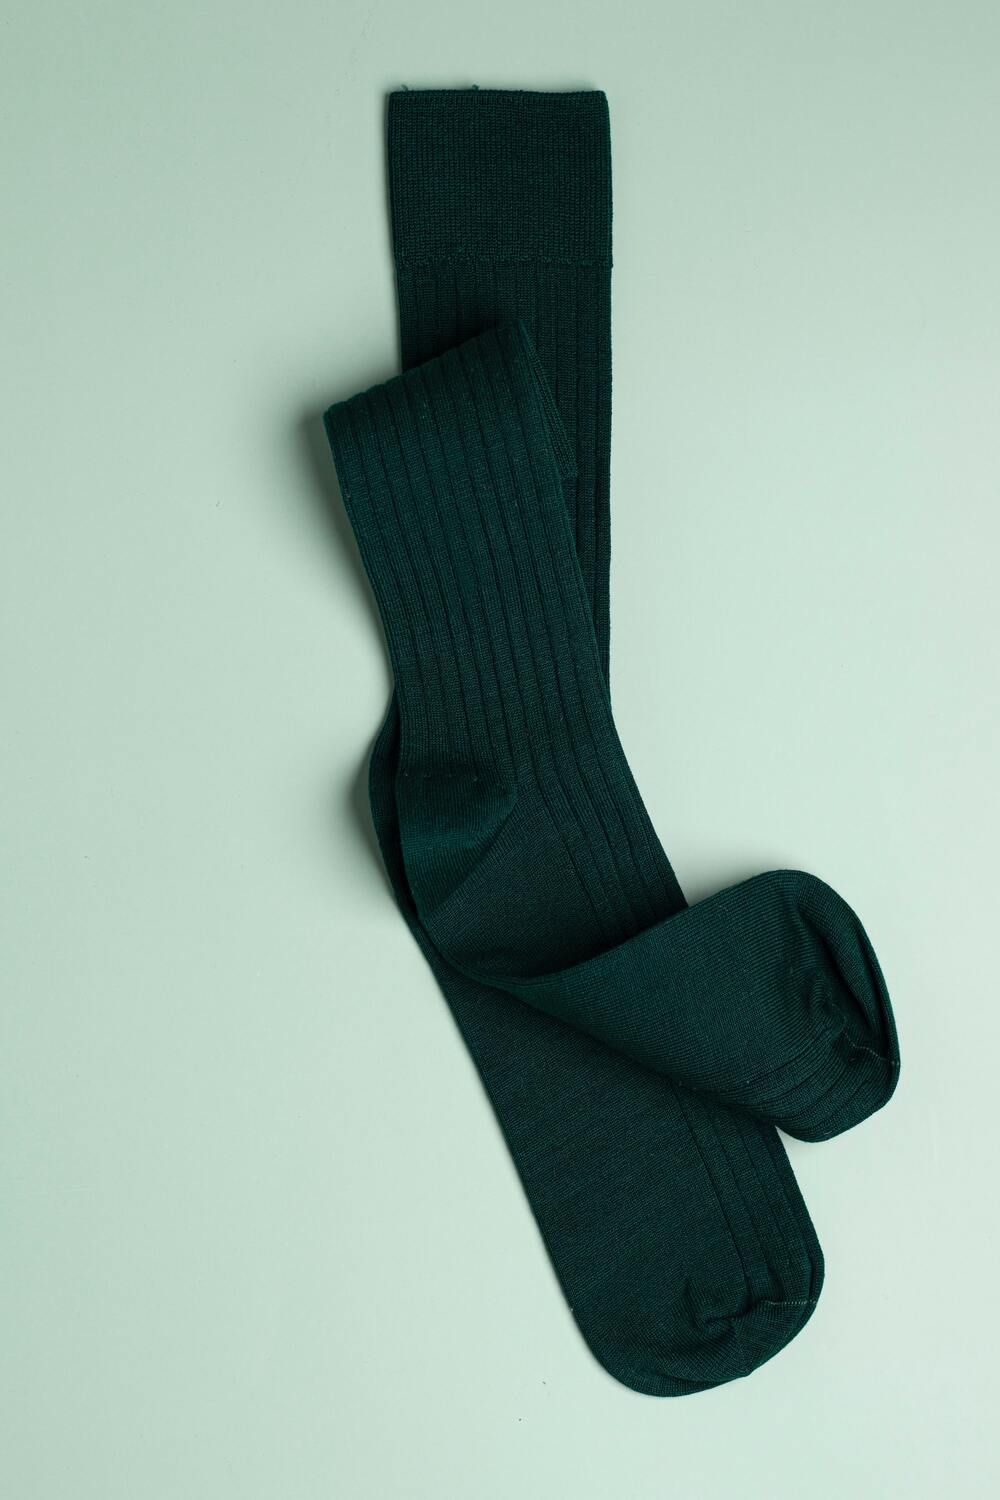 Insulated socks